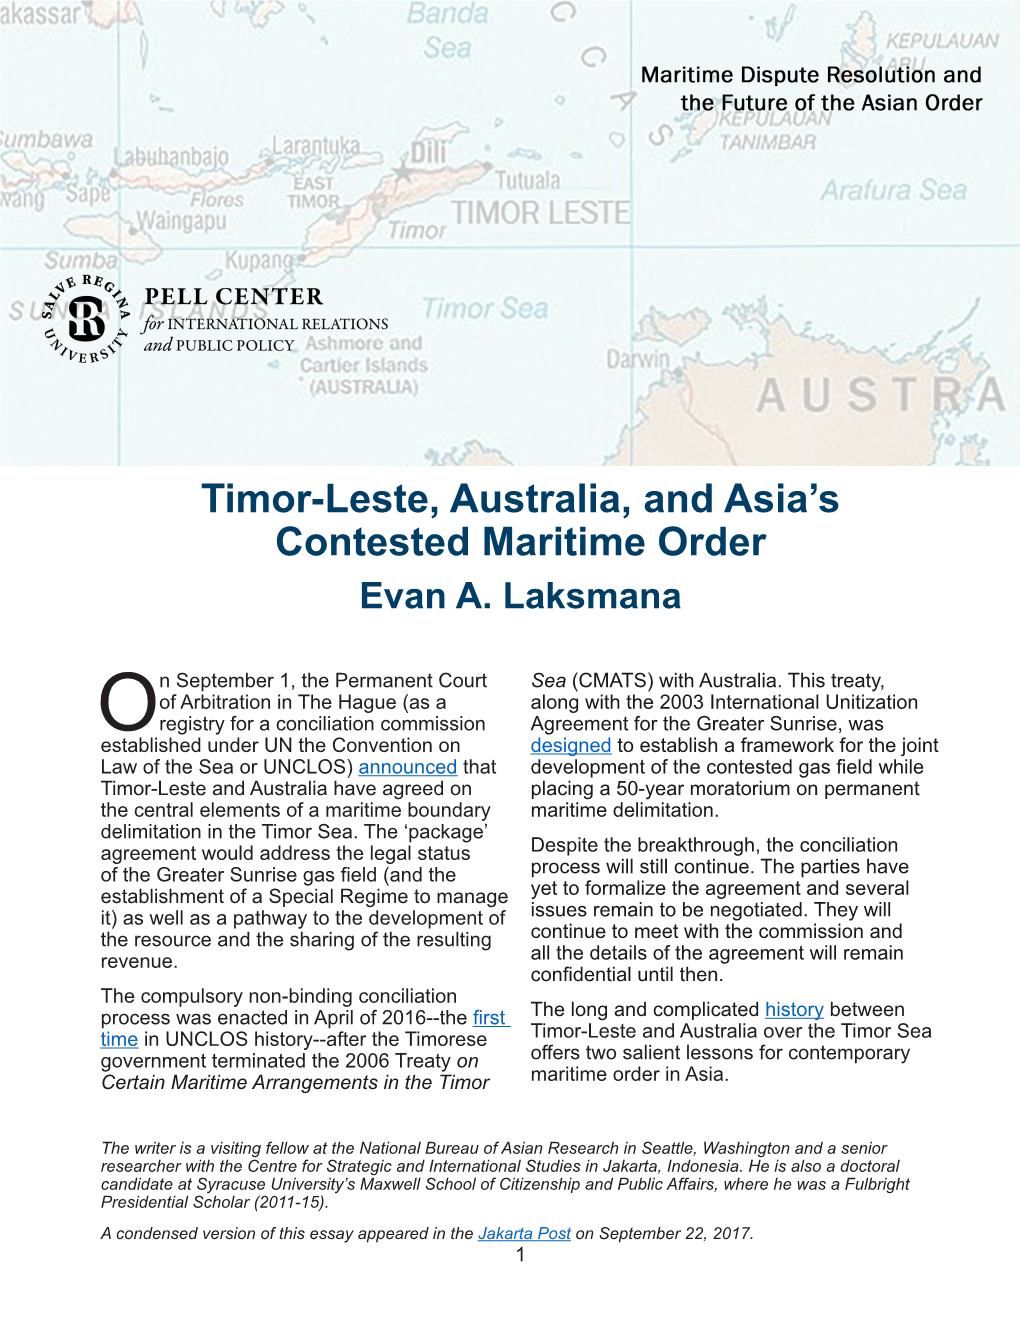 Timor-Leste, Australia, and Asia's Contested Maritime Order